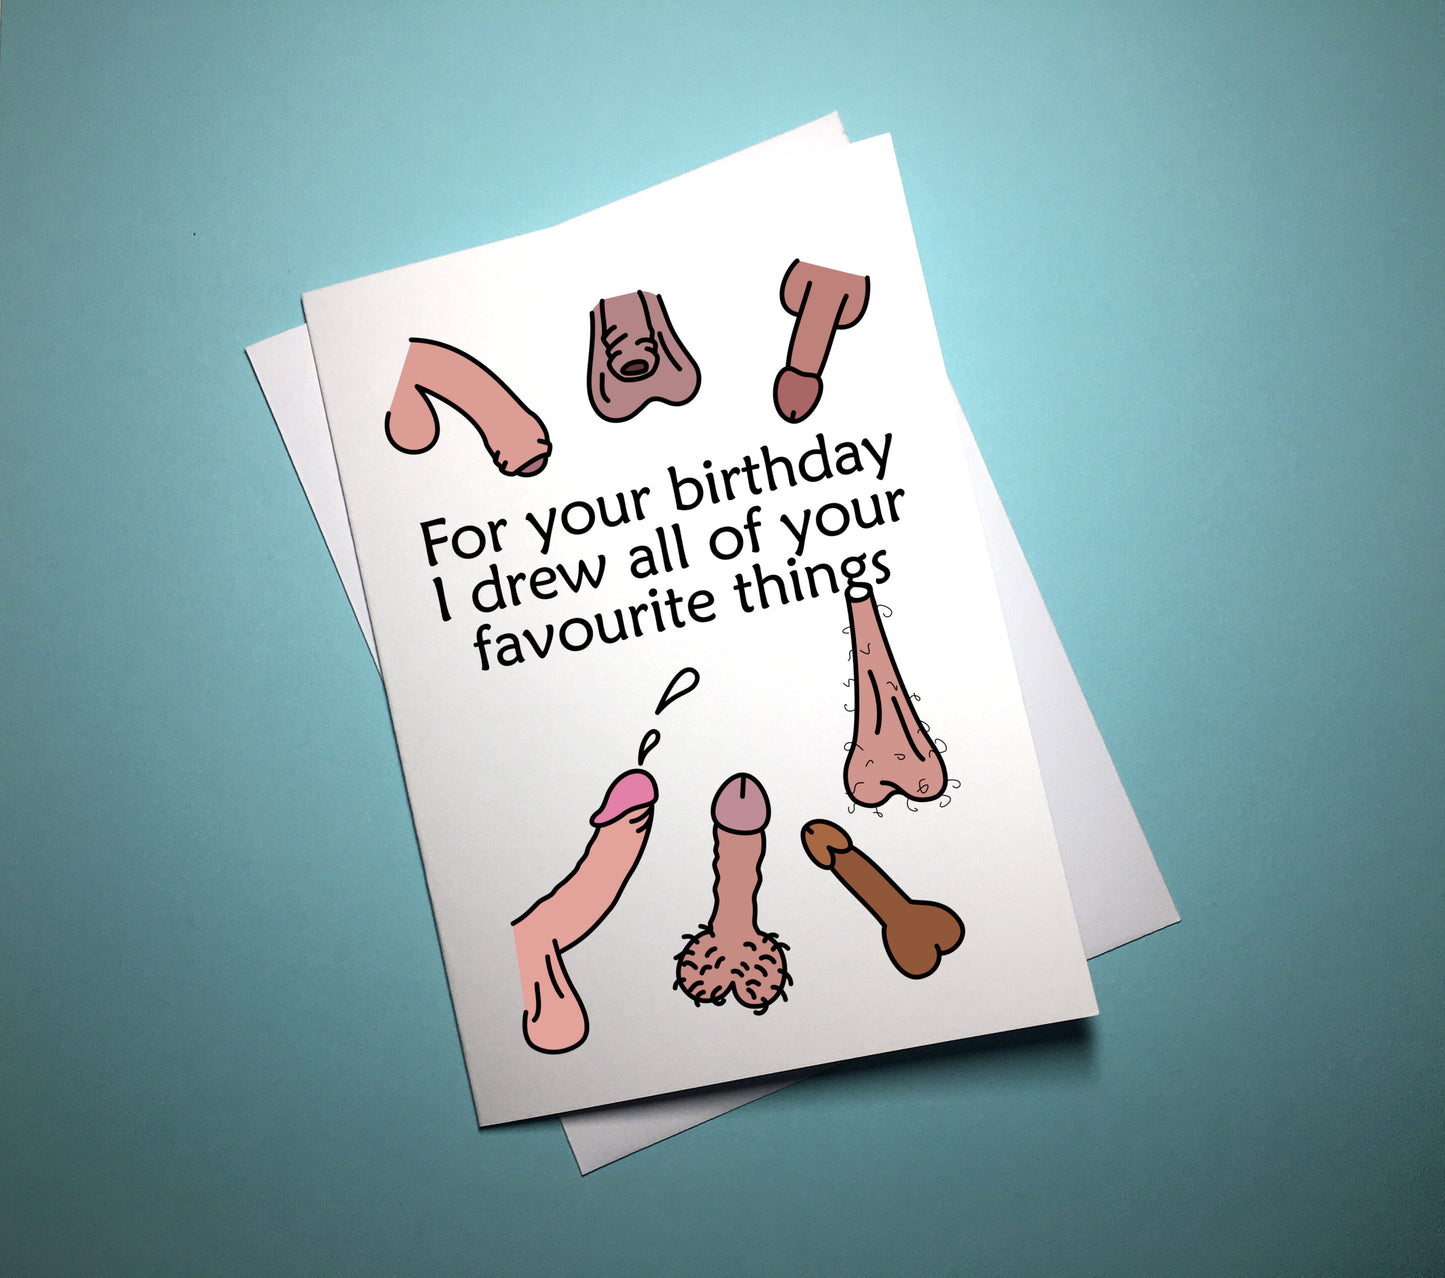 Birthday Card - Favourite Things